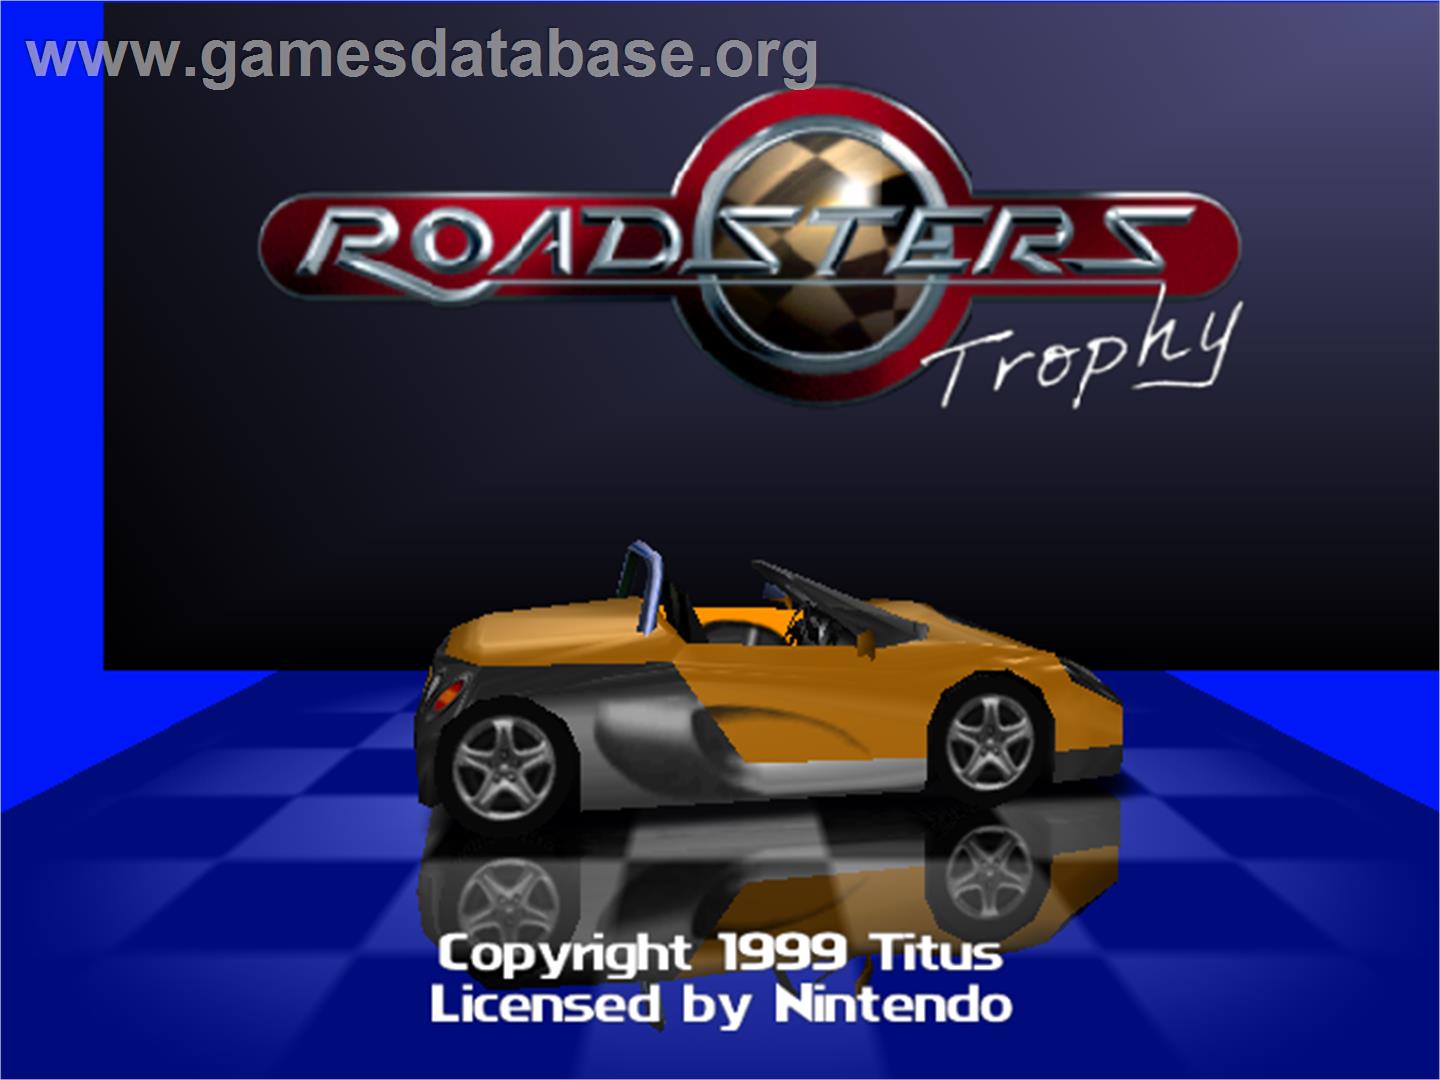 Roadsters: Trophy - Nintendo N64 - Artwork - Title Screen